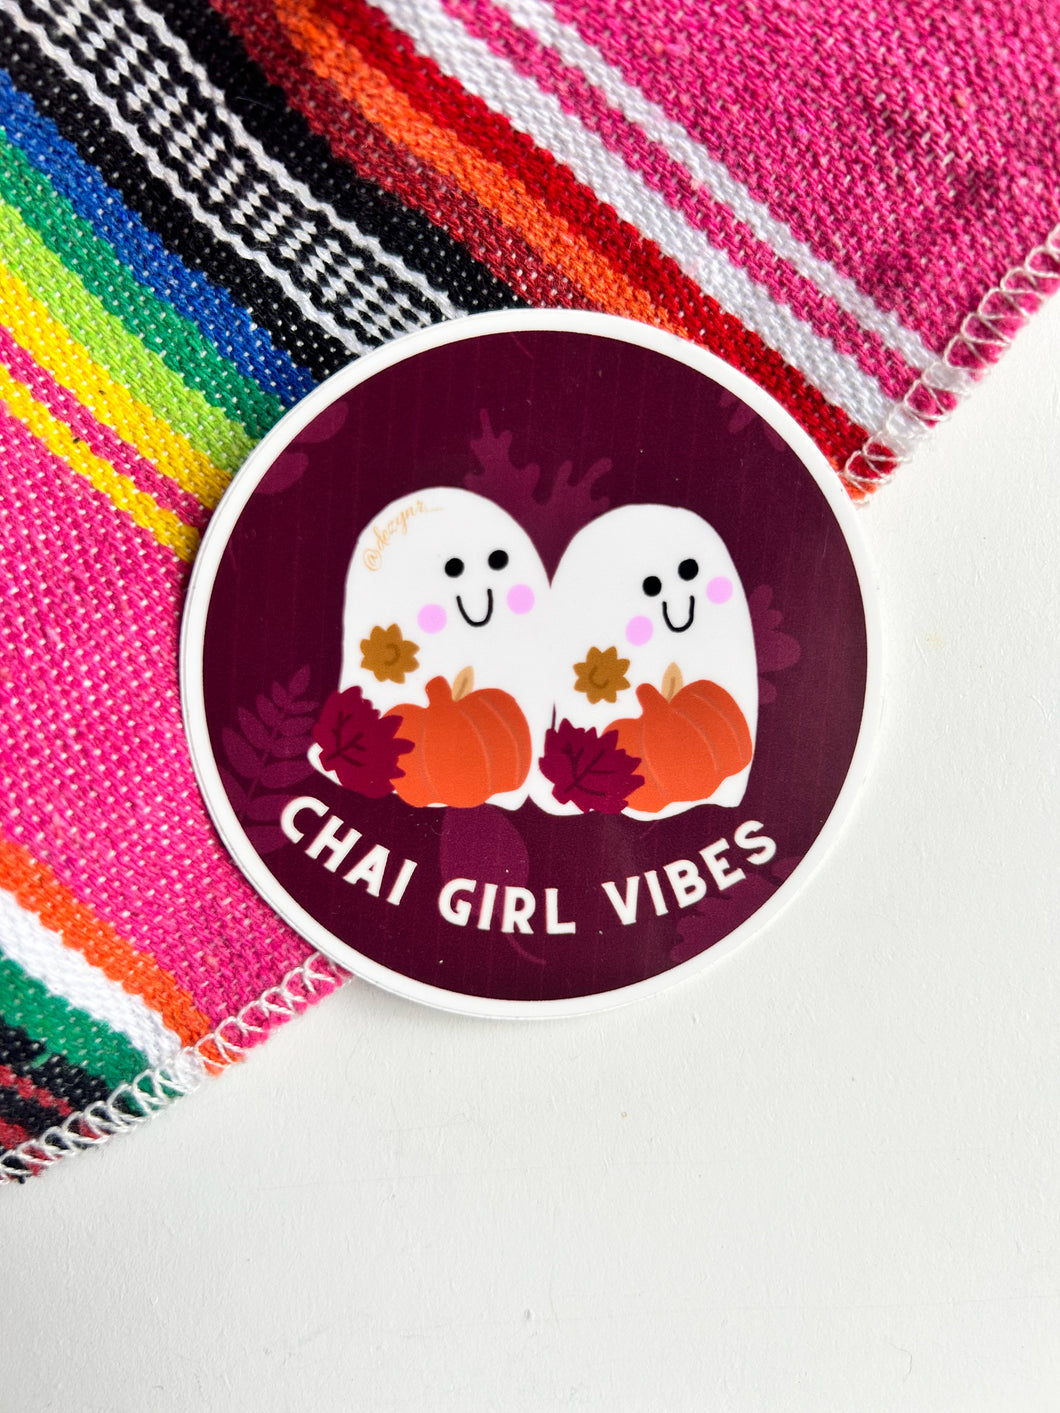 Chai Girl Vibes sticker